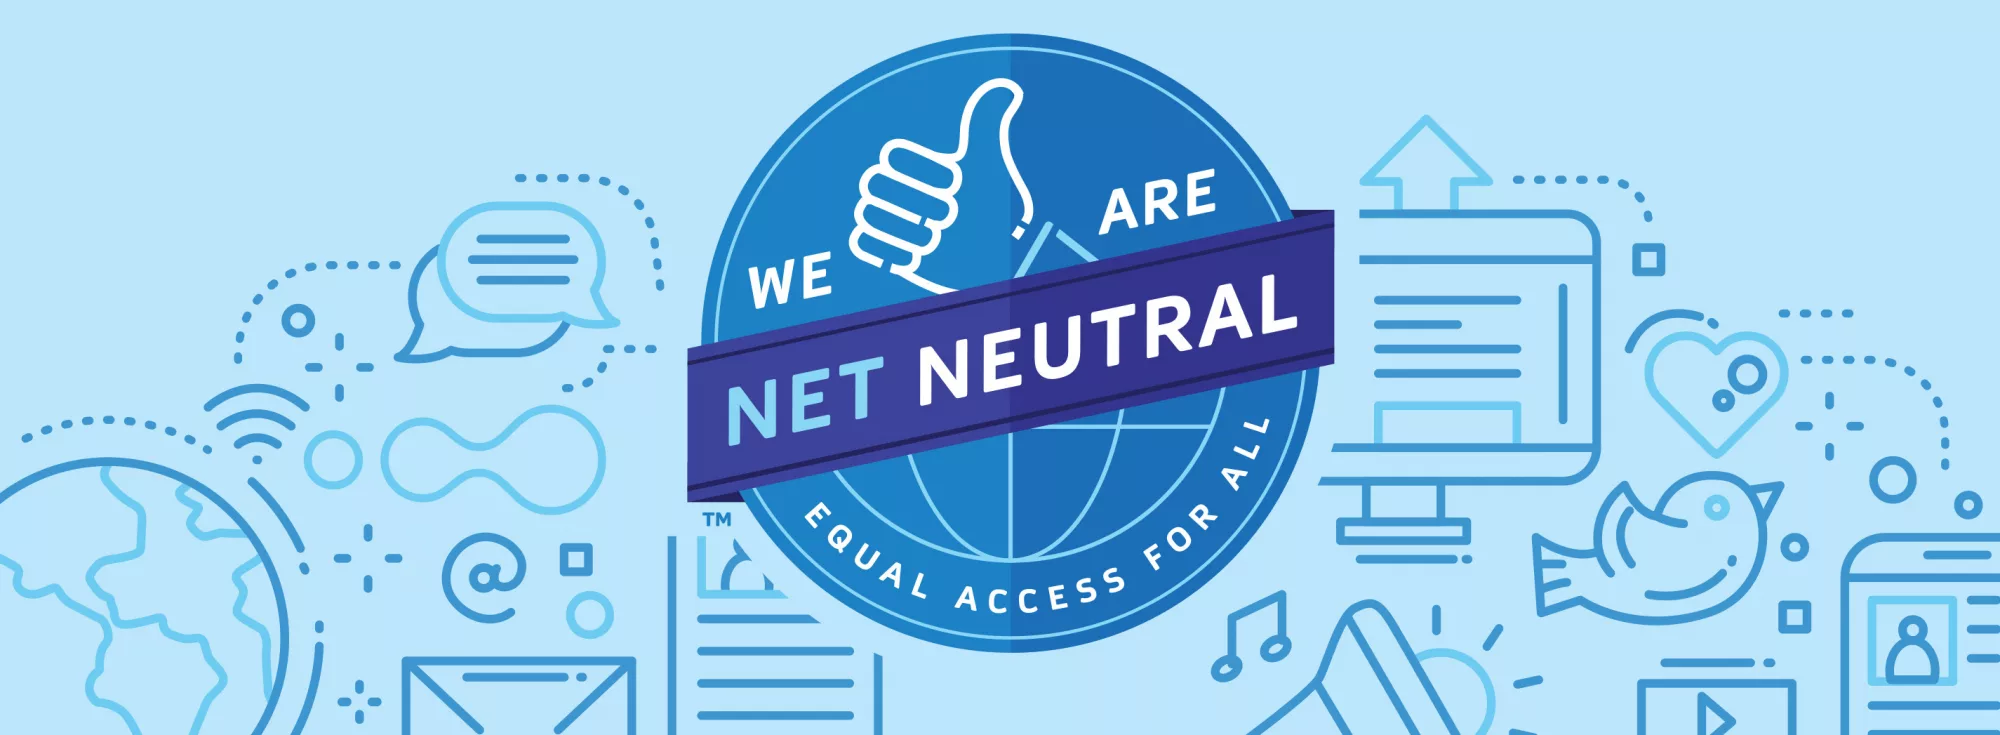 RTC Net Neutral Campaign